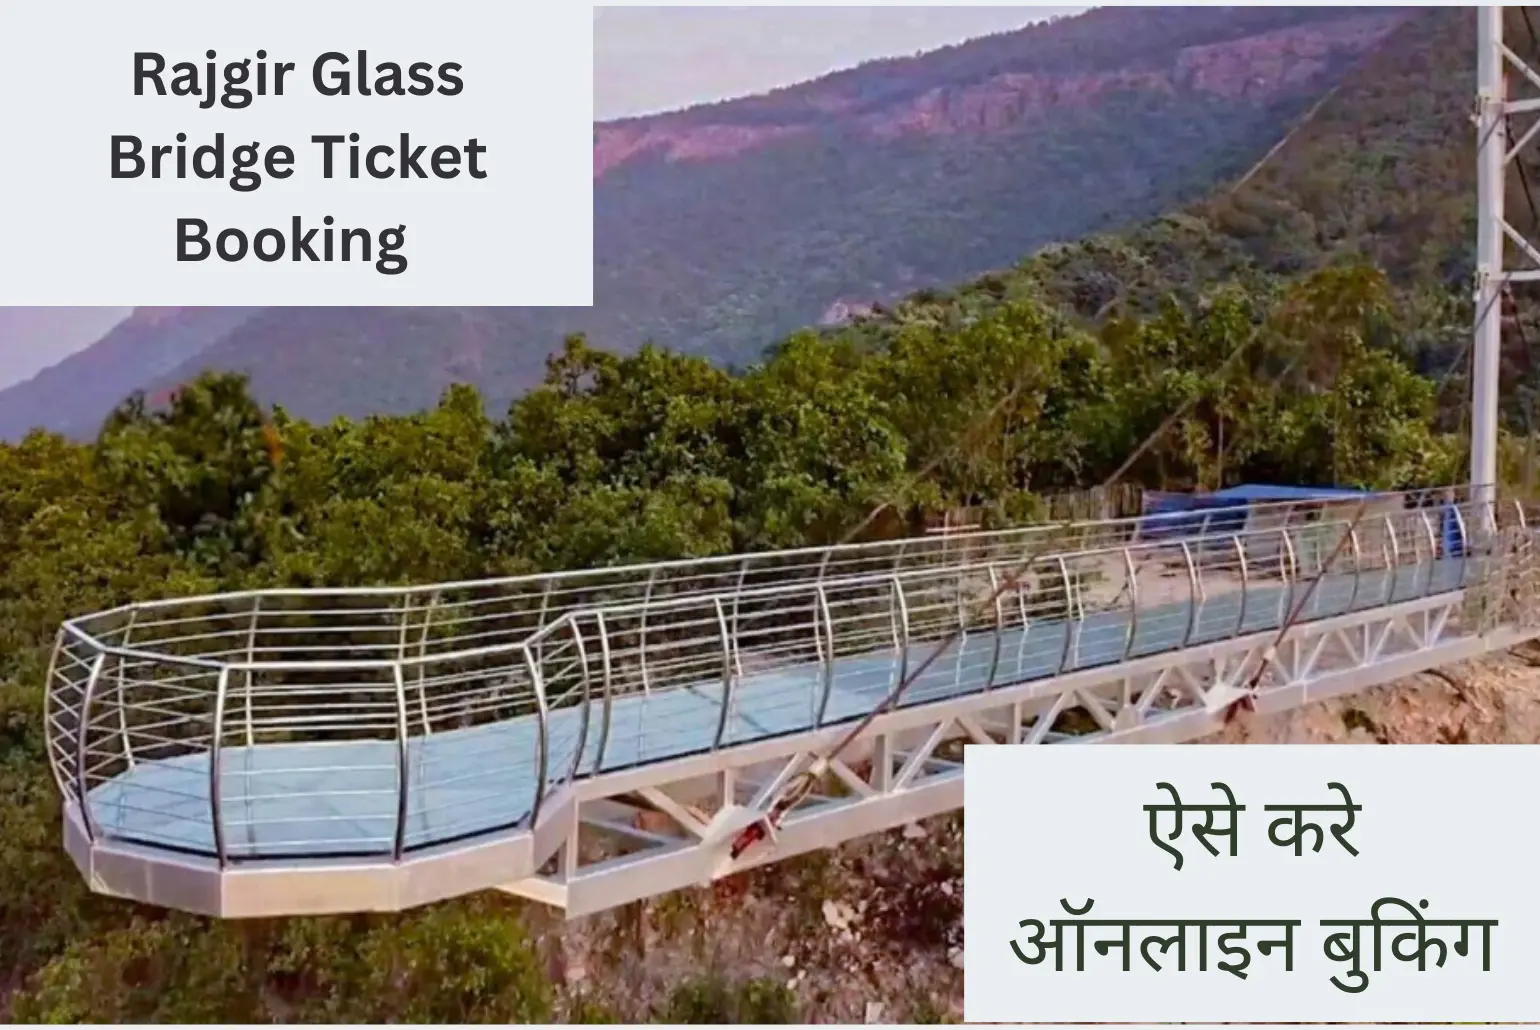 Rajgir Glass Bridge Ticket Booking, Rajgir Glass Bridge Ticket Booking Price